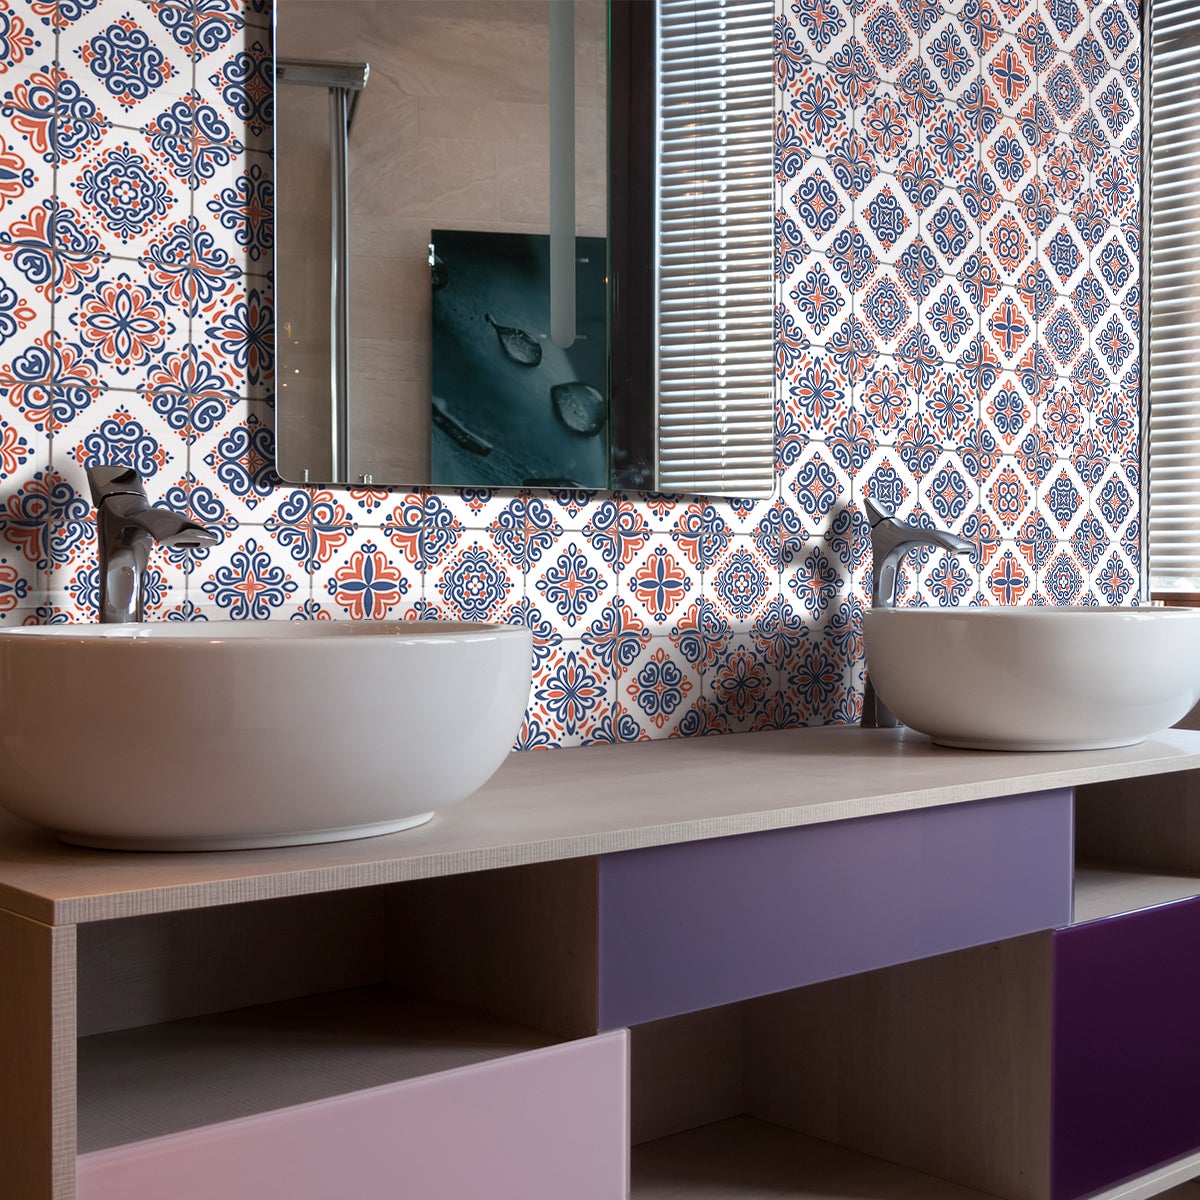 60 vinilo baldosas azulejos Sefania - adhesivo de pared - revestimiento  sticker mural decorativo - 90x150cm-60stickers15x15cm